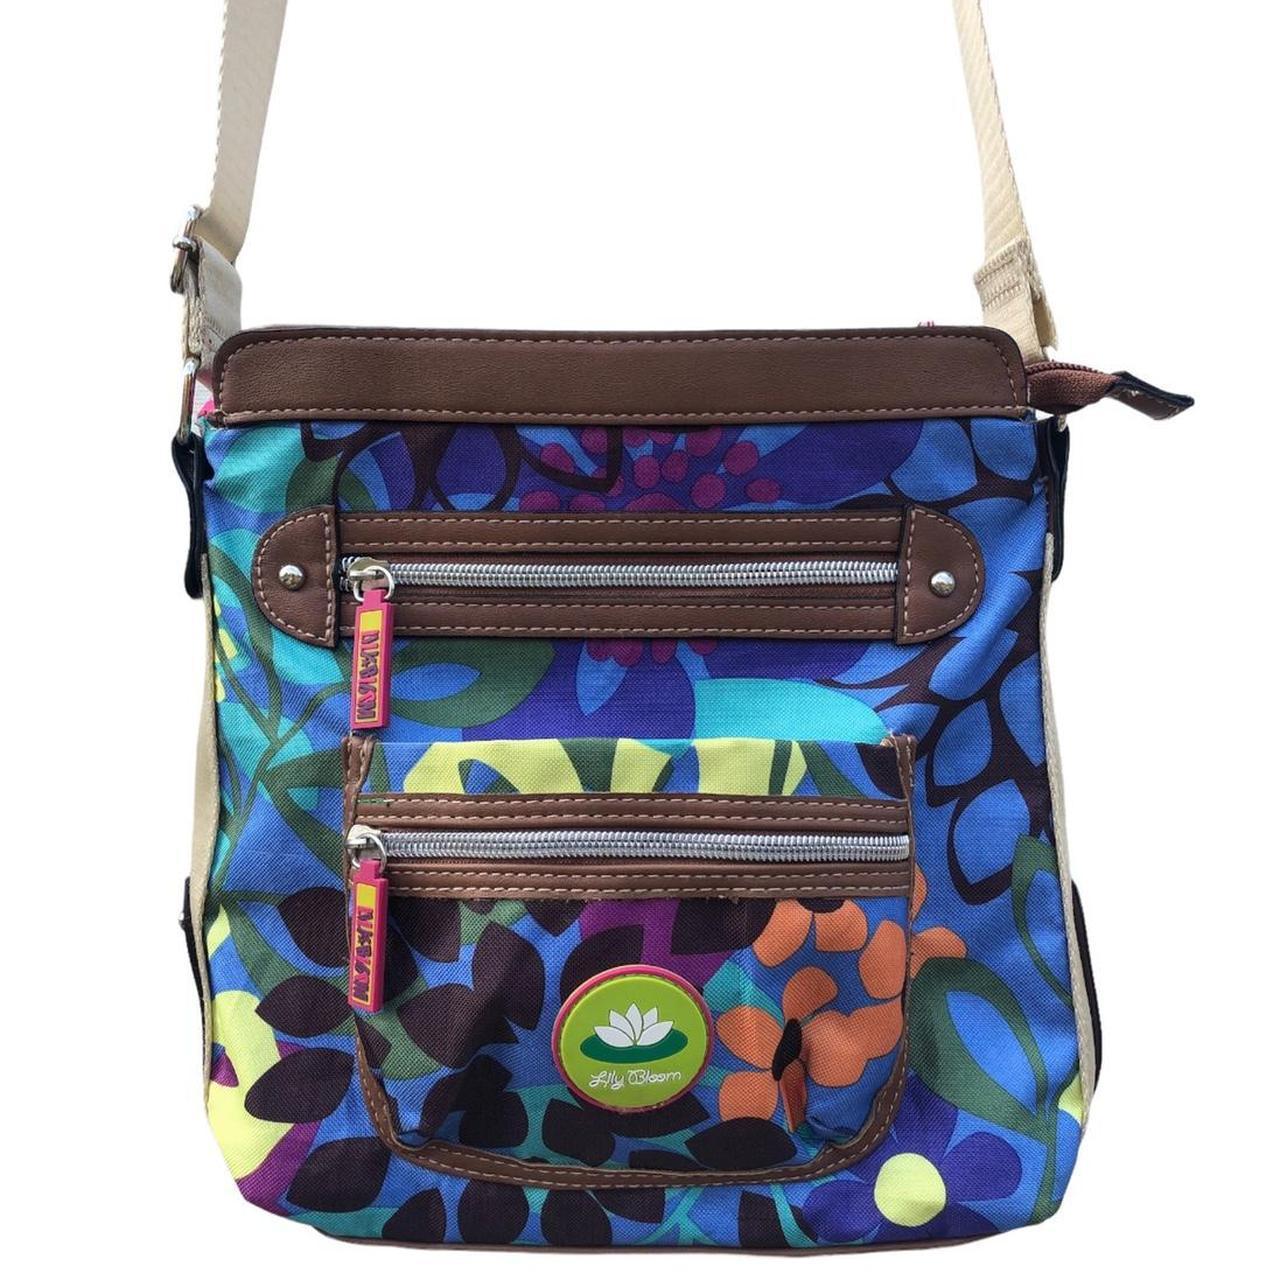 Target Crossbody purse By Melinda Beck 11x12 For Target | eBay